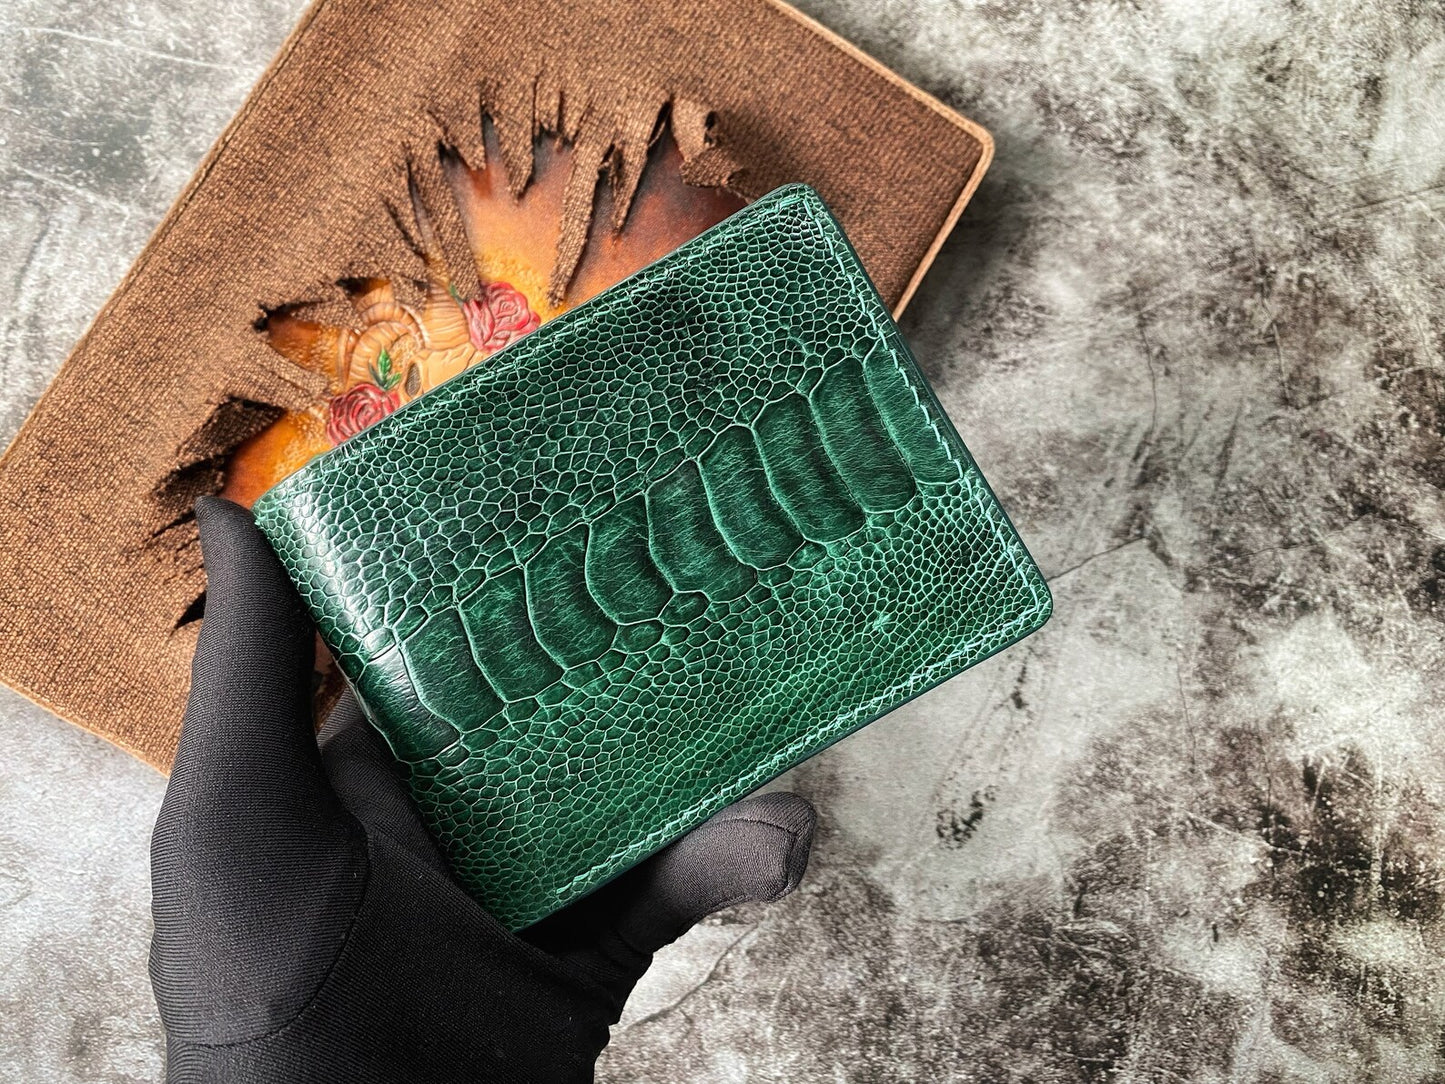 Custom Green Ostrich Leg Wallet with Coin Pocket